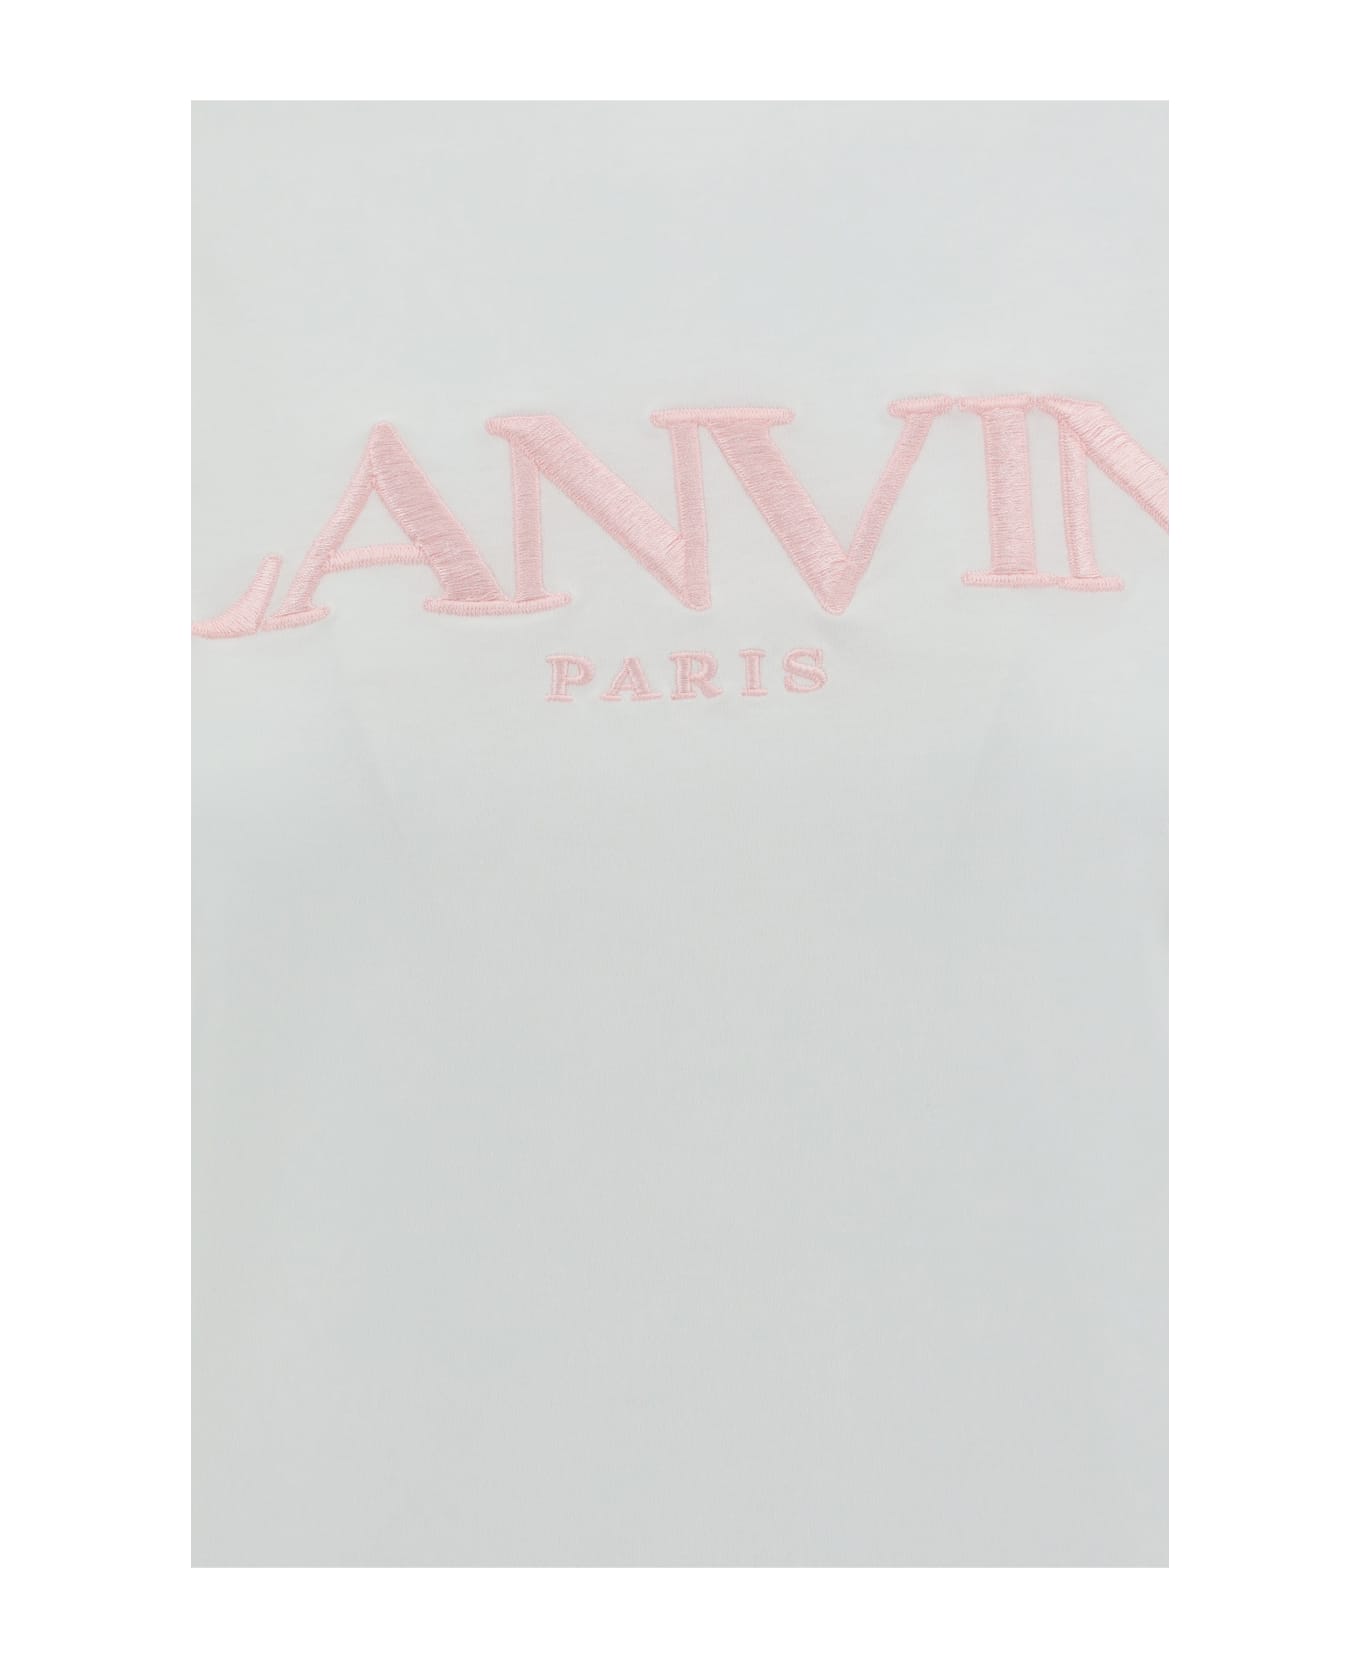 Lanvin T-shirt - Bianco Tシャツ